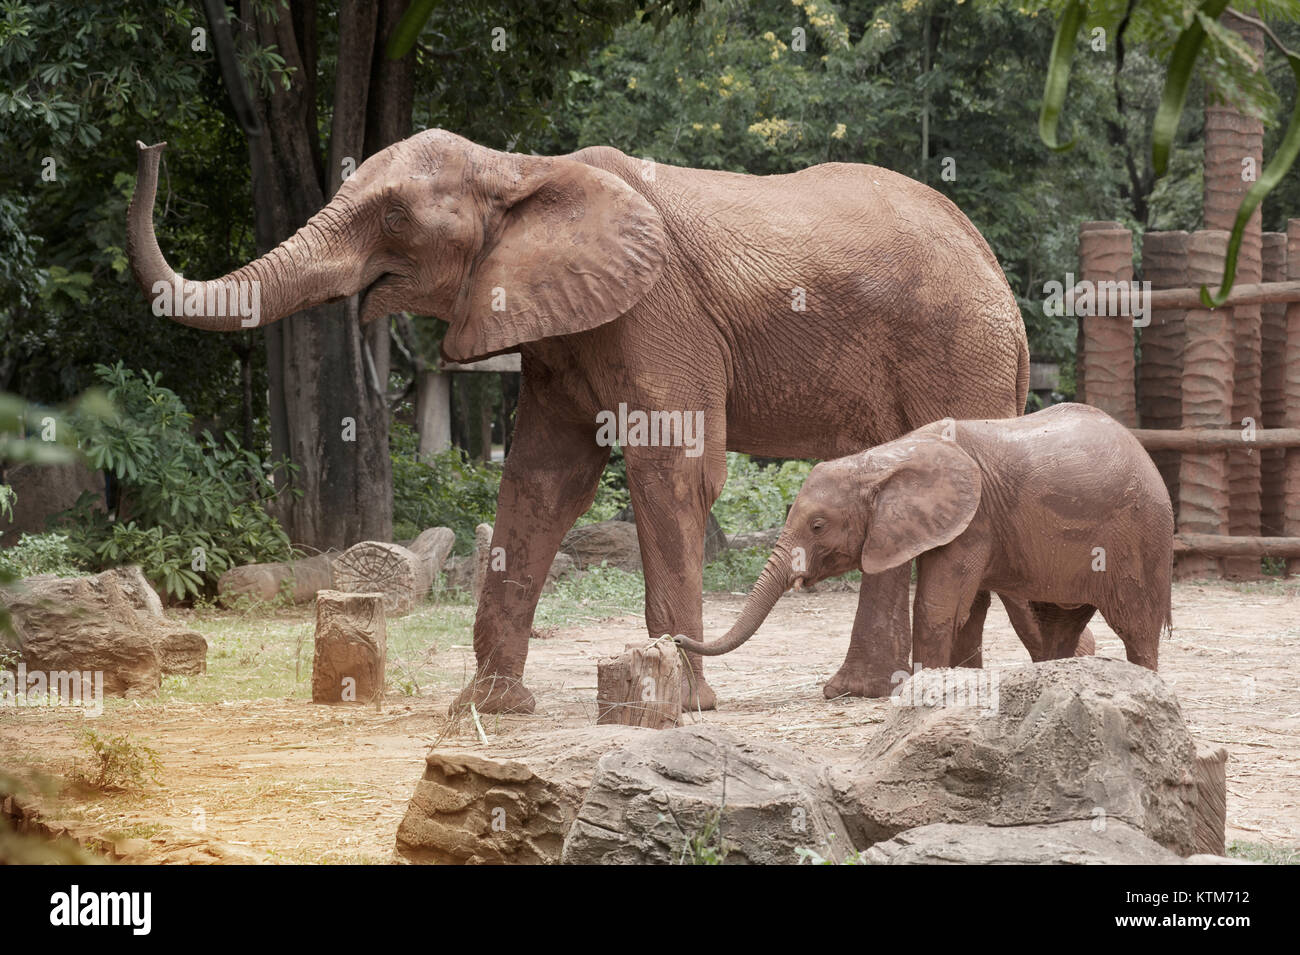 Elephants are large mammals of the family Elephantidae and the order Proboscidea. Stock Photo